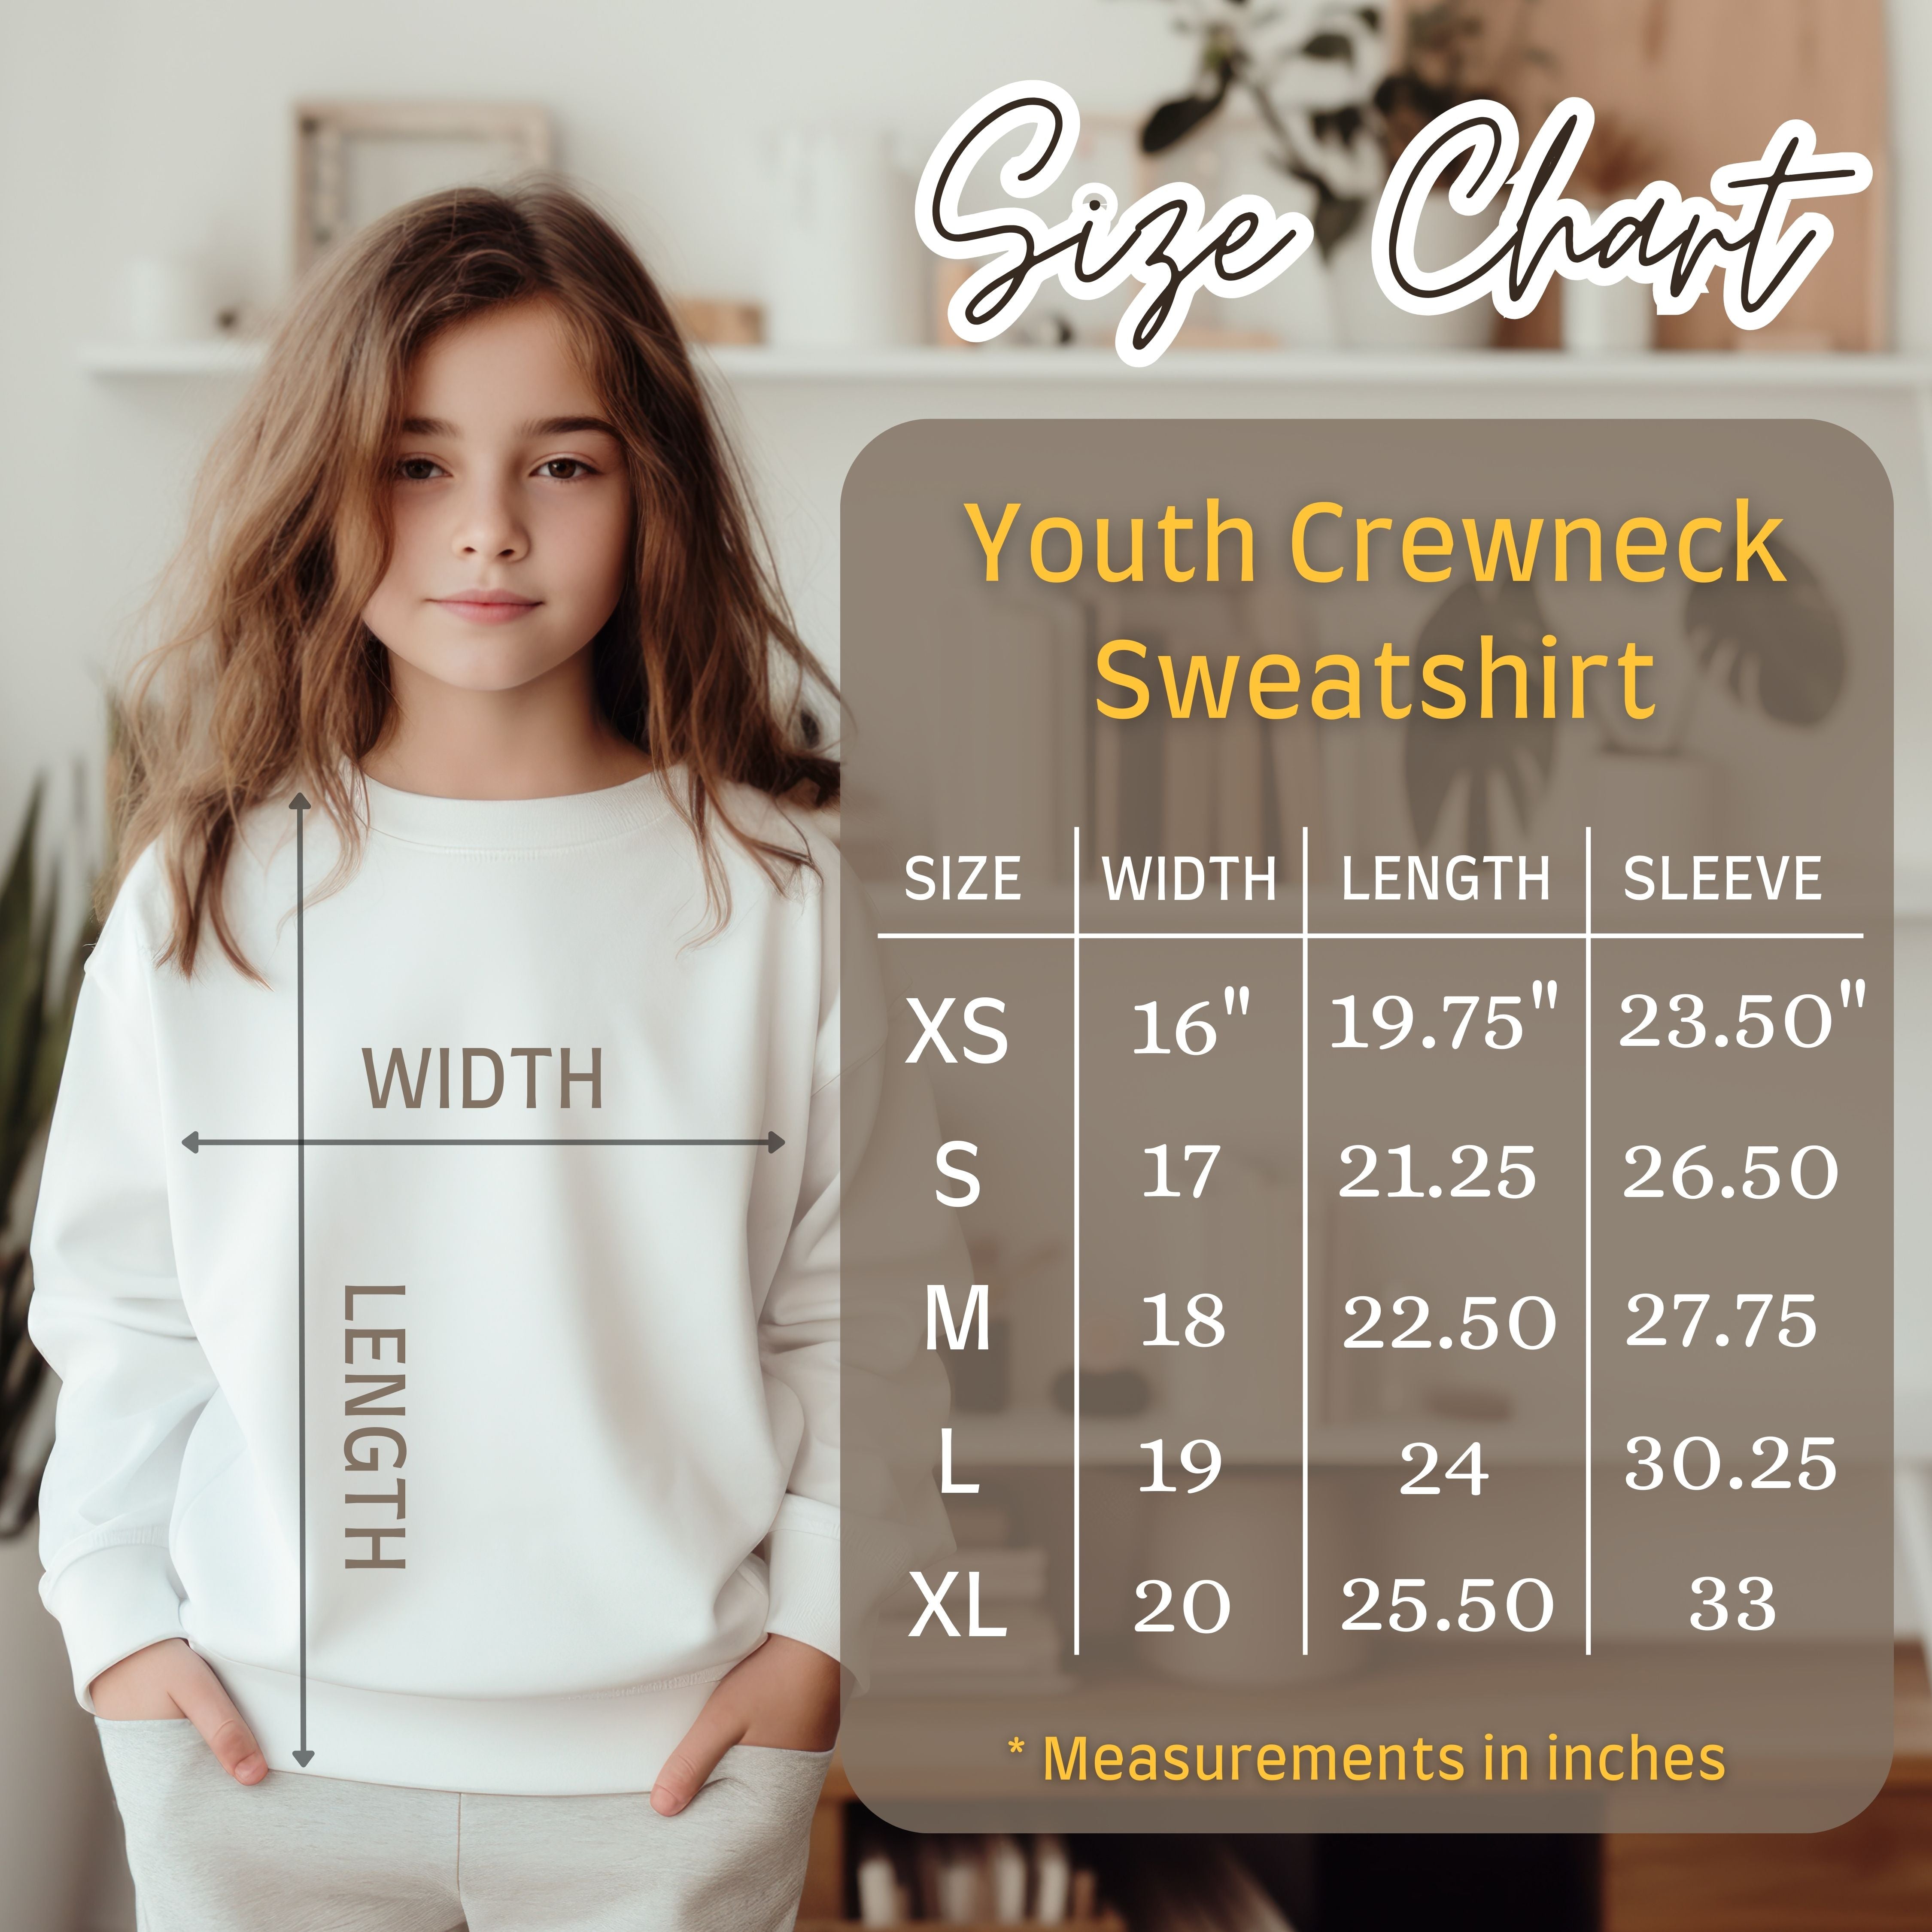 Choose Wisdom Youth Crew Neck Sweatshirt